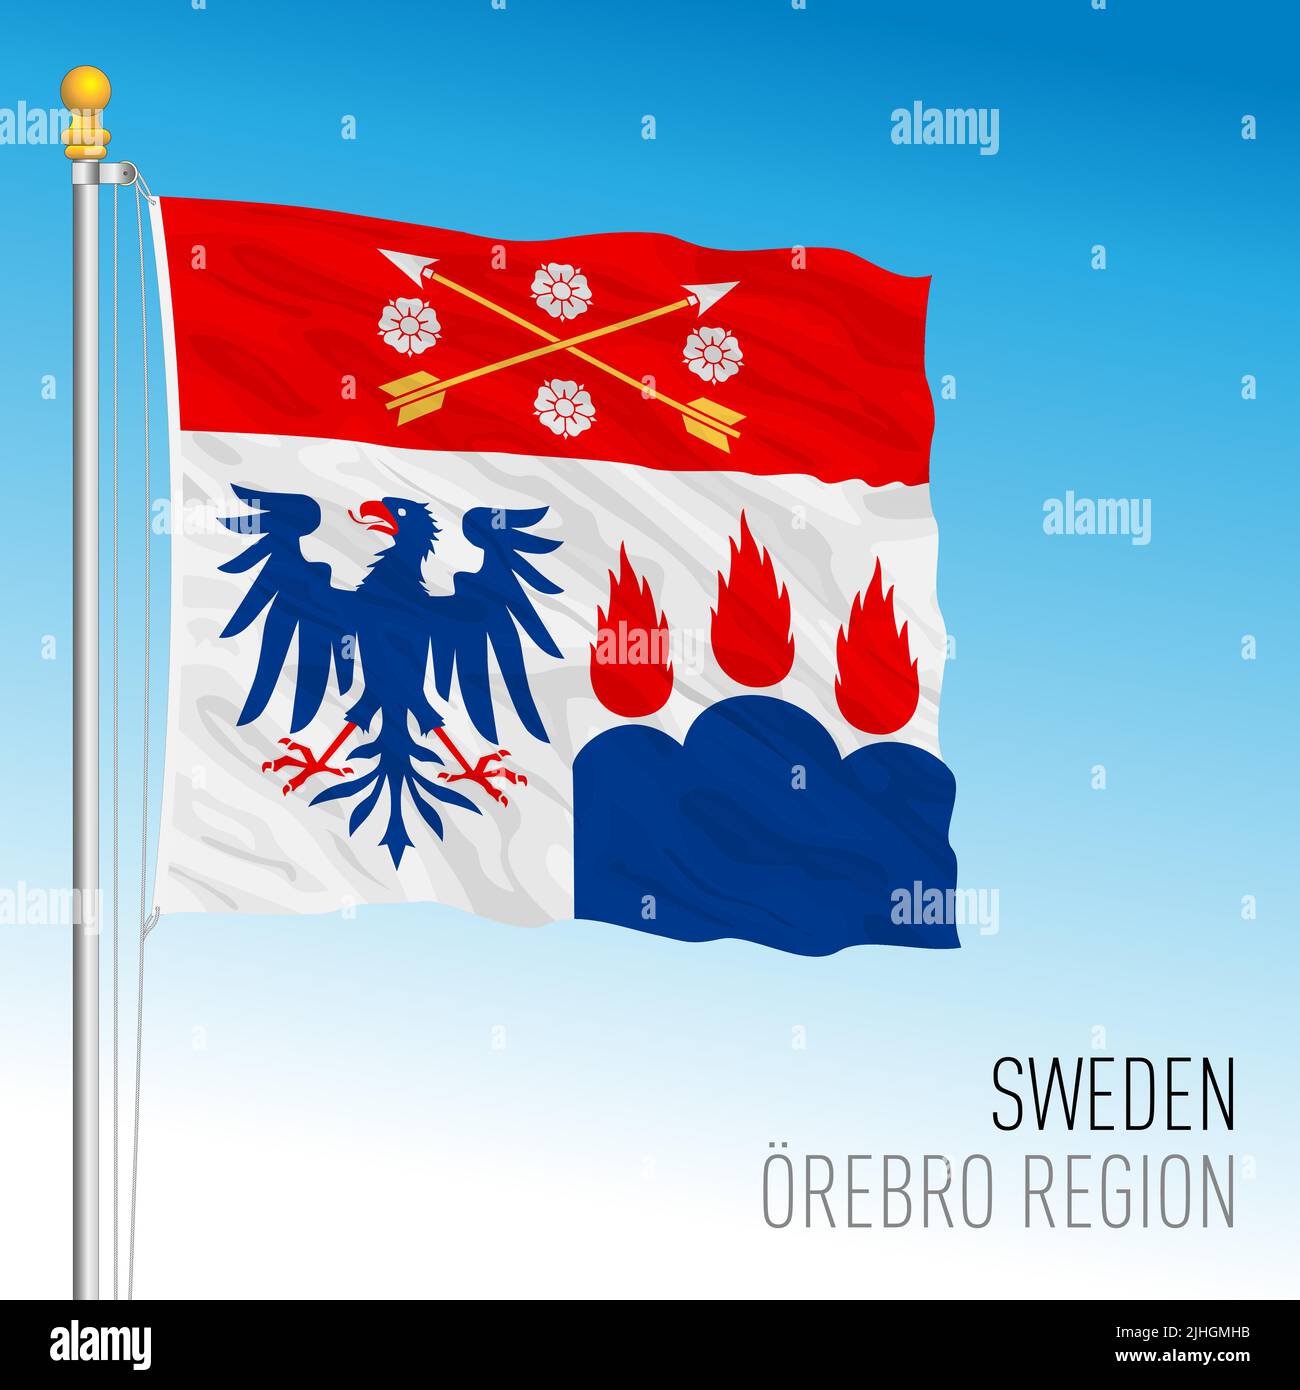 Orebro county regional flag, Kingdom of Sweden, vector illustration Stock Vector